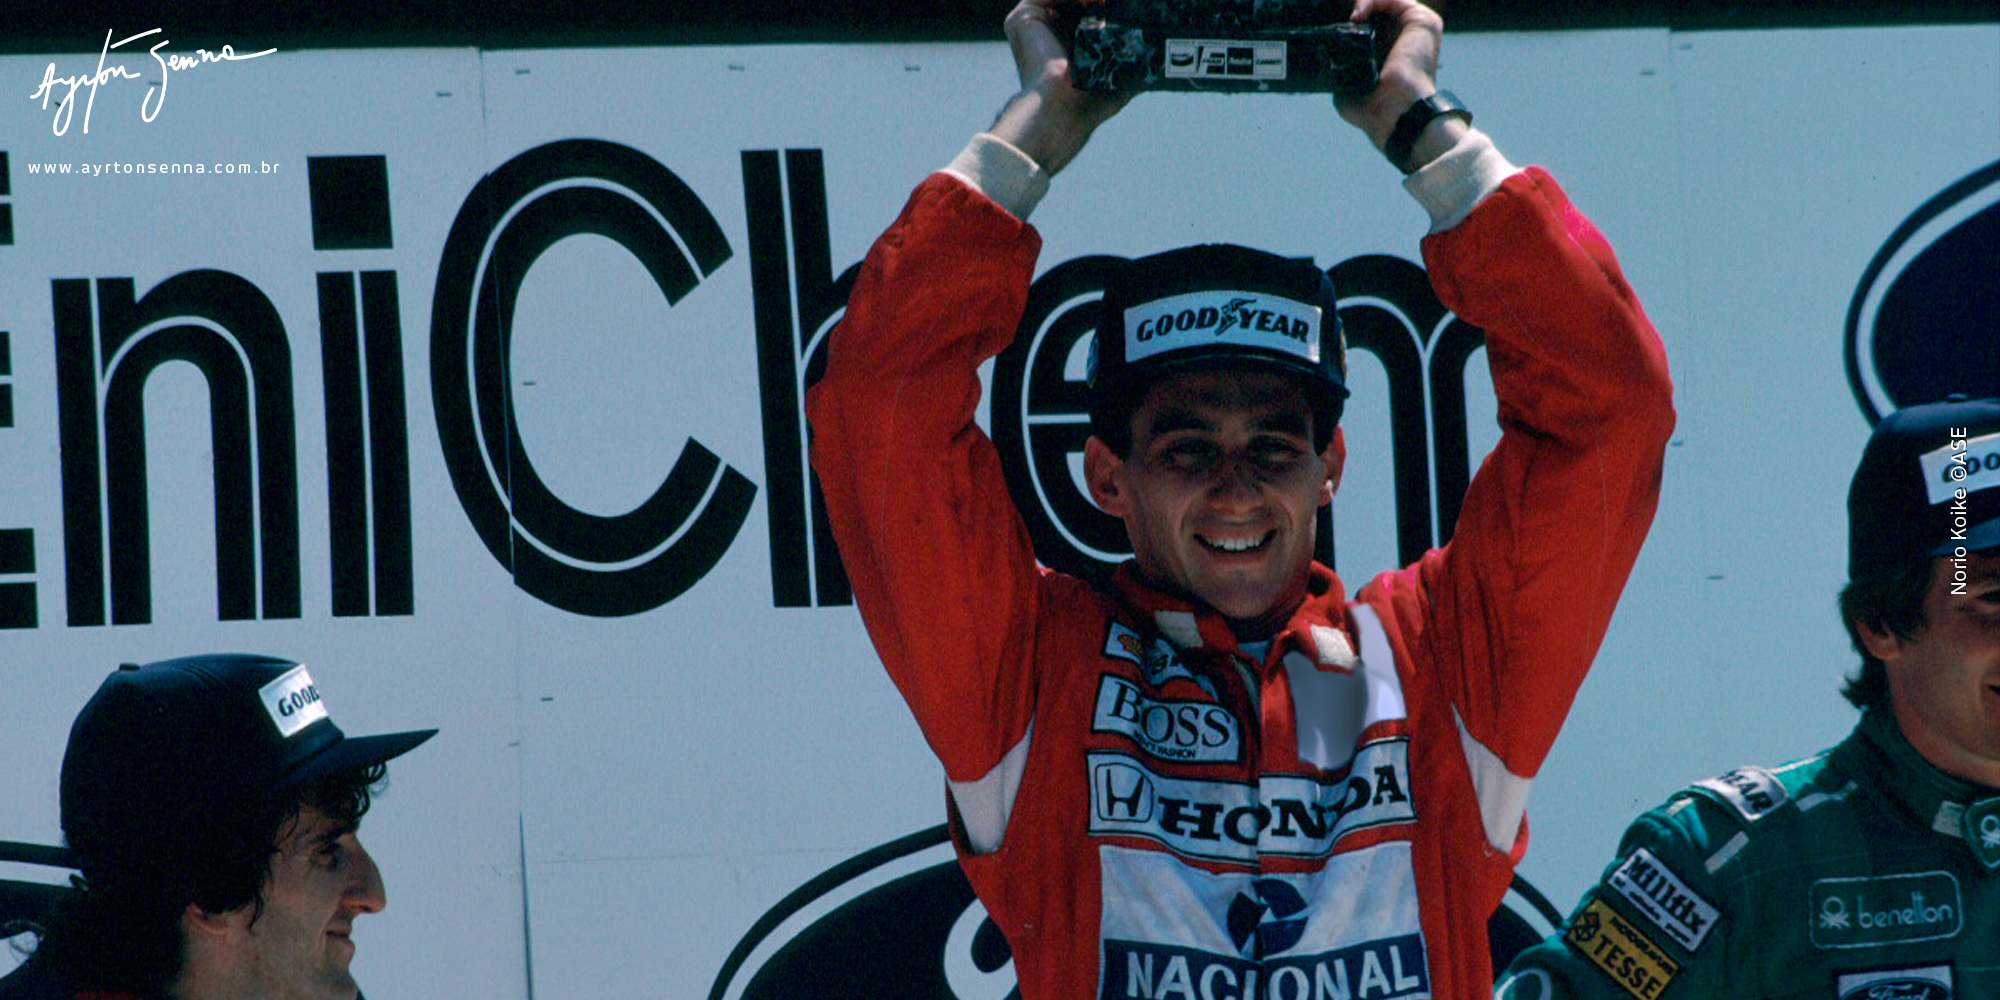 Ayrton Senna, 5 Wins in the USA. All on street circuits.